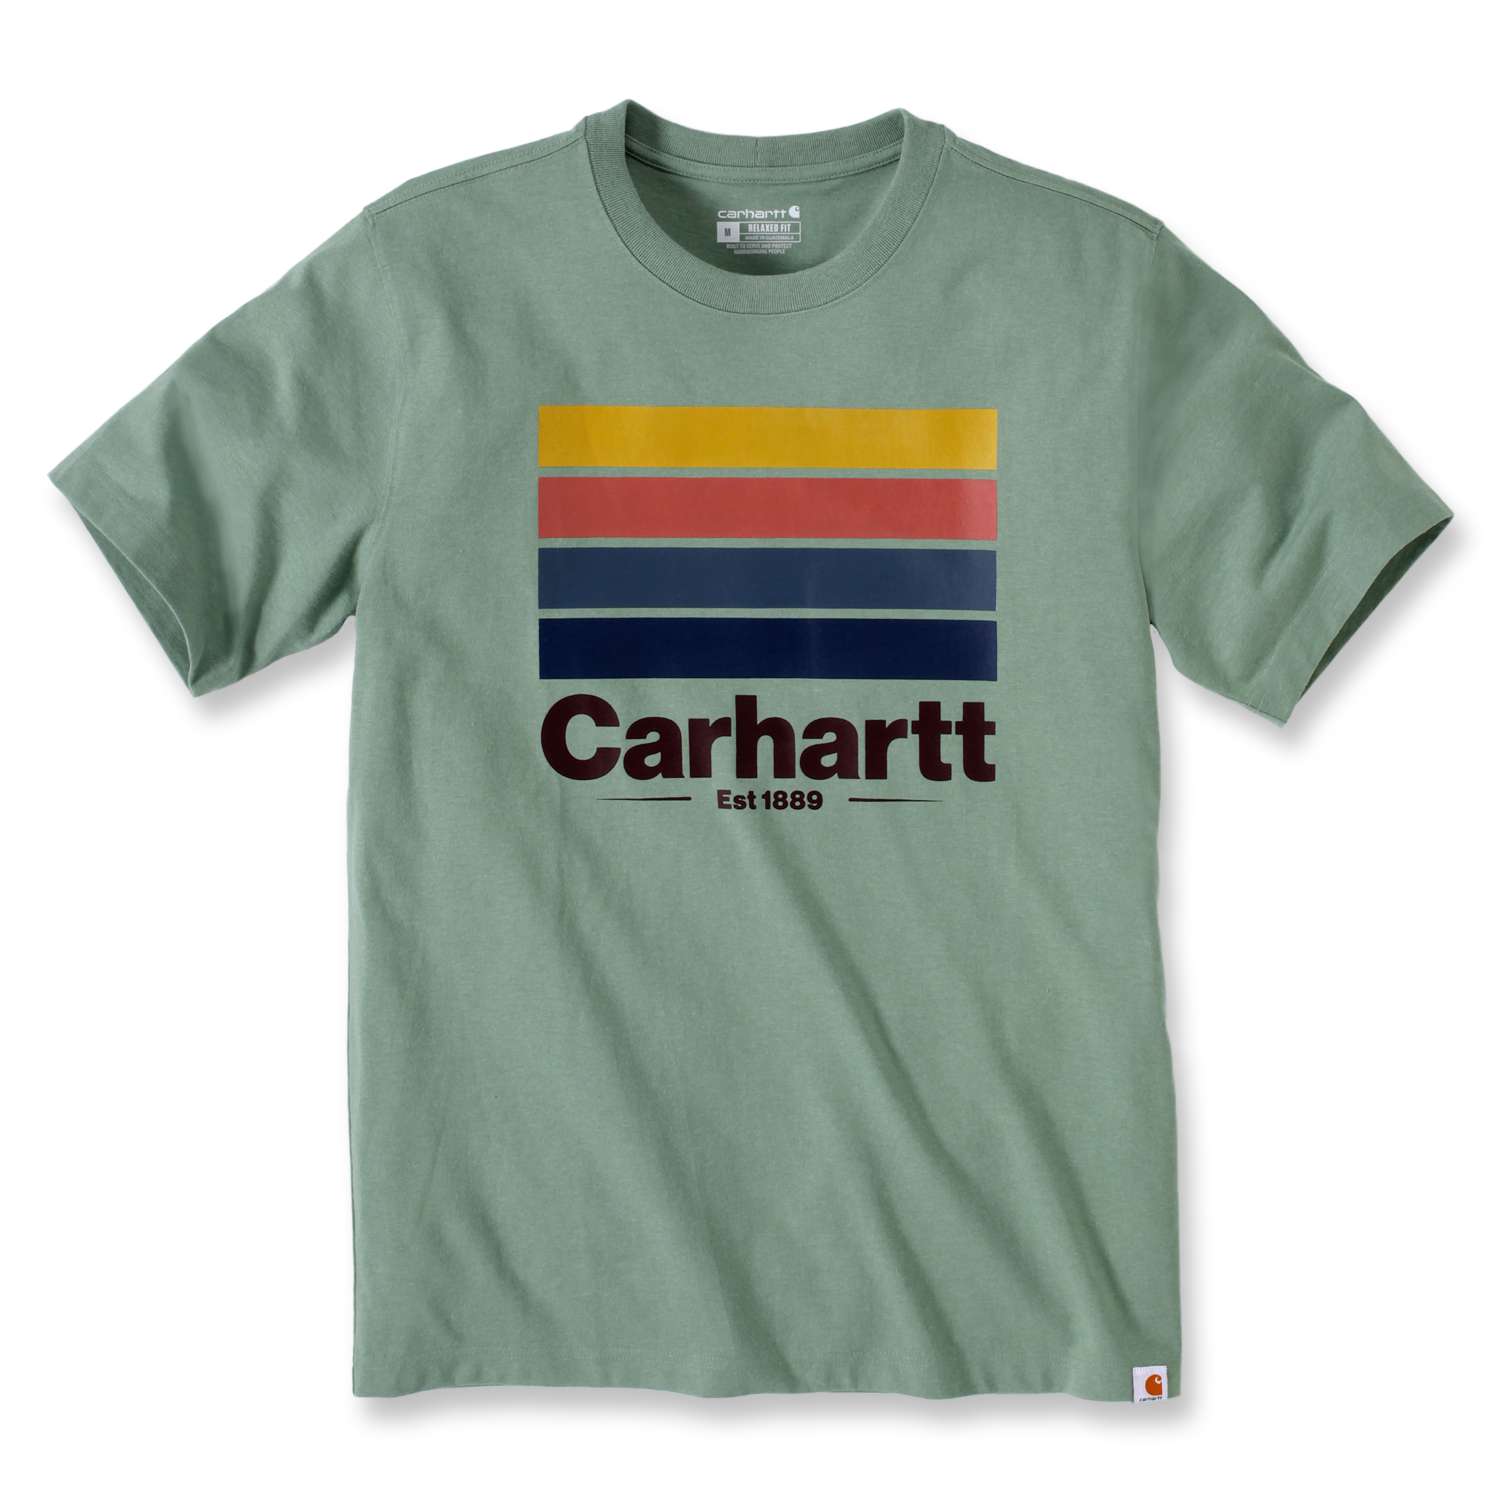 Kurzarm-T-Shirt mit mehrfarbigem Linienaufdruck